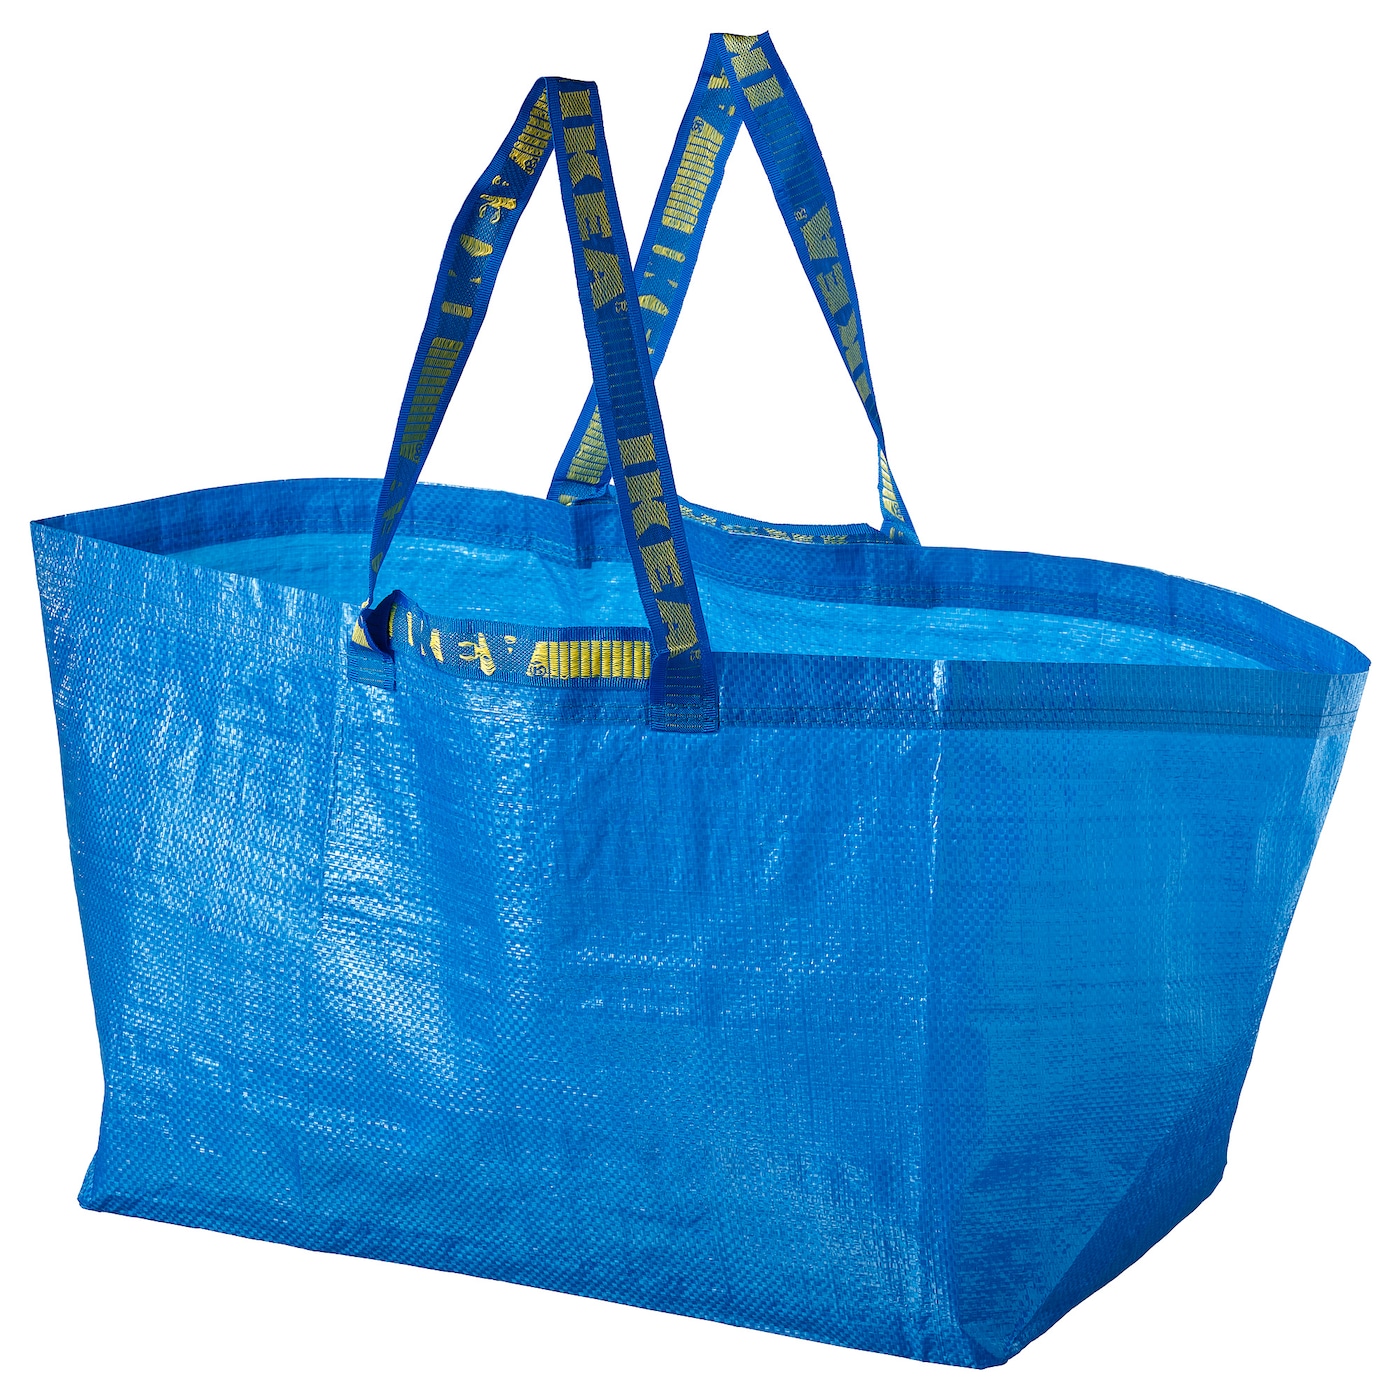 frakta-shopping-bag-large-blue__0711231_pe728076_s5.jpg